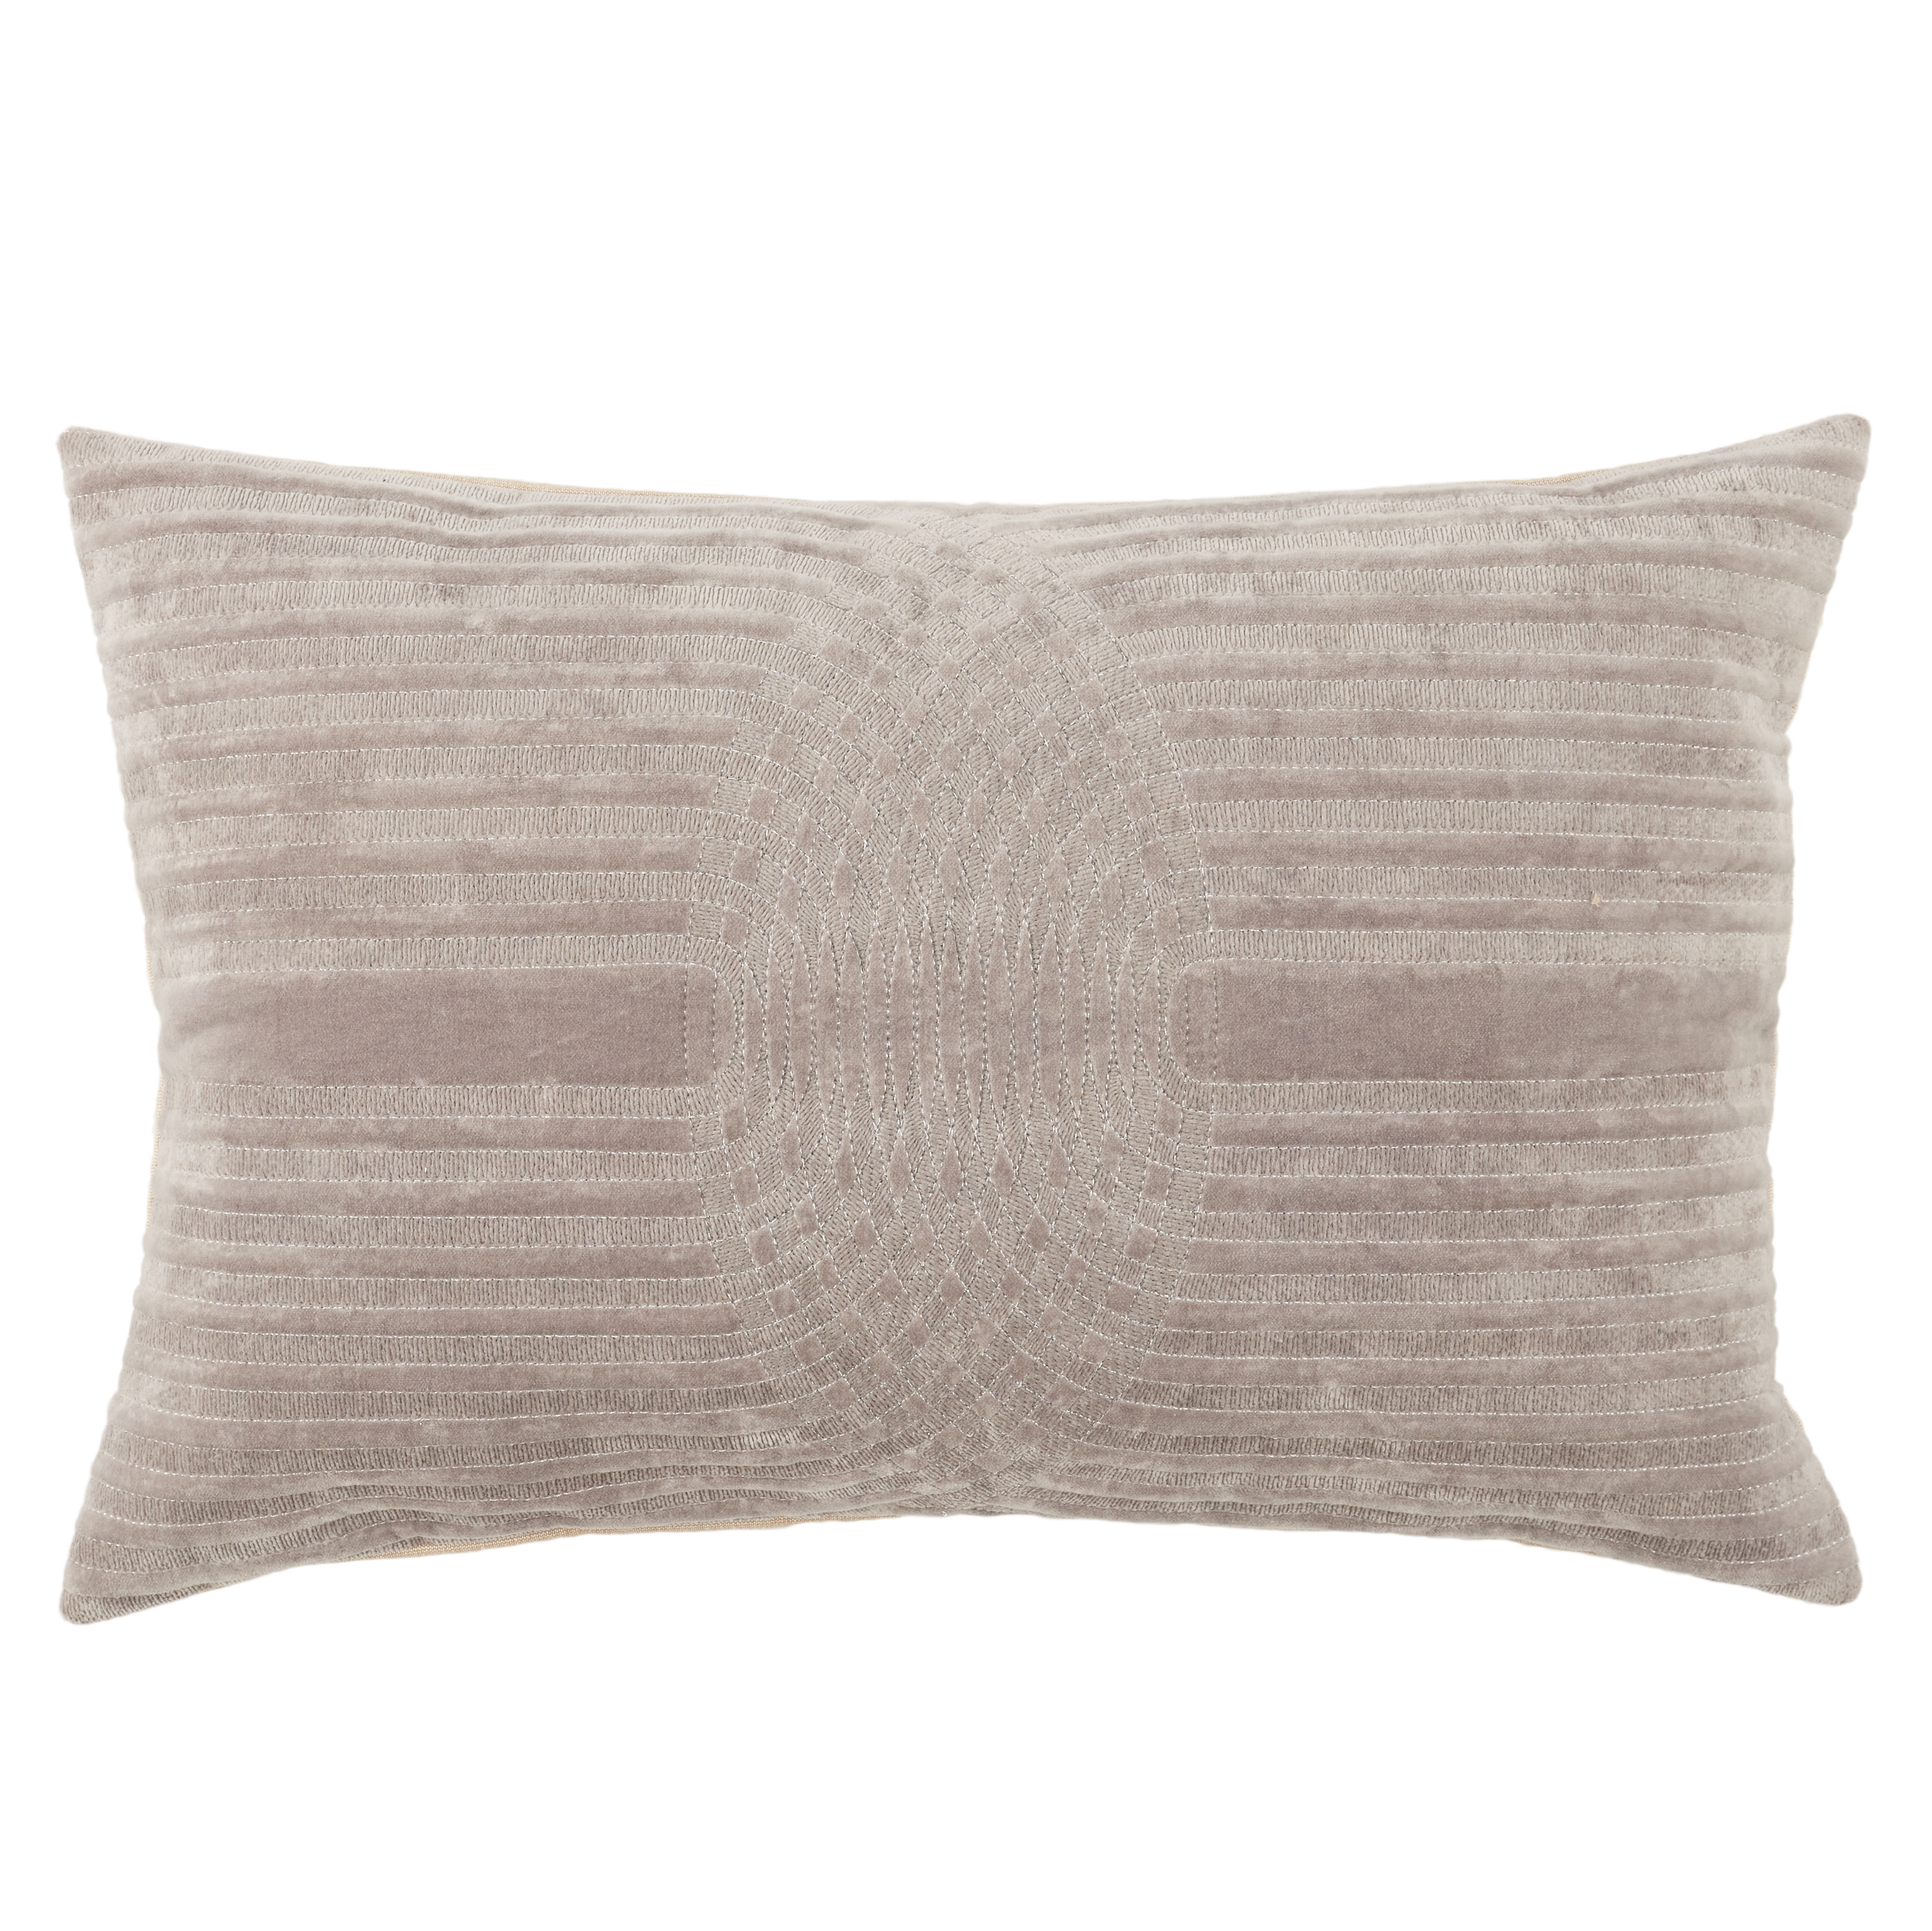 Deco Embroidered Lumbar Pillow, Gray, 24" x 16" - Image 0